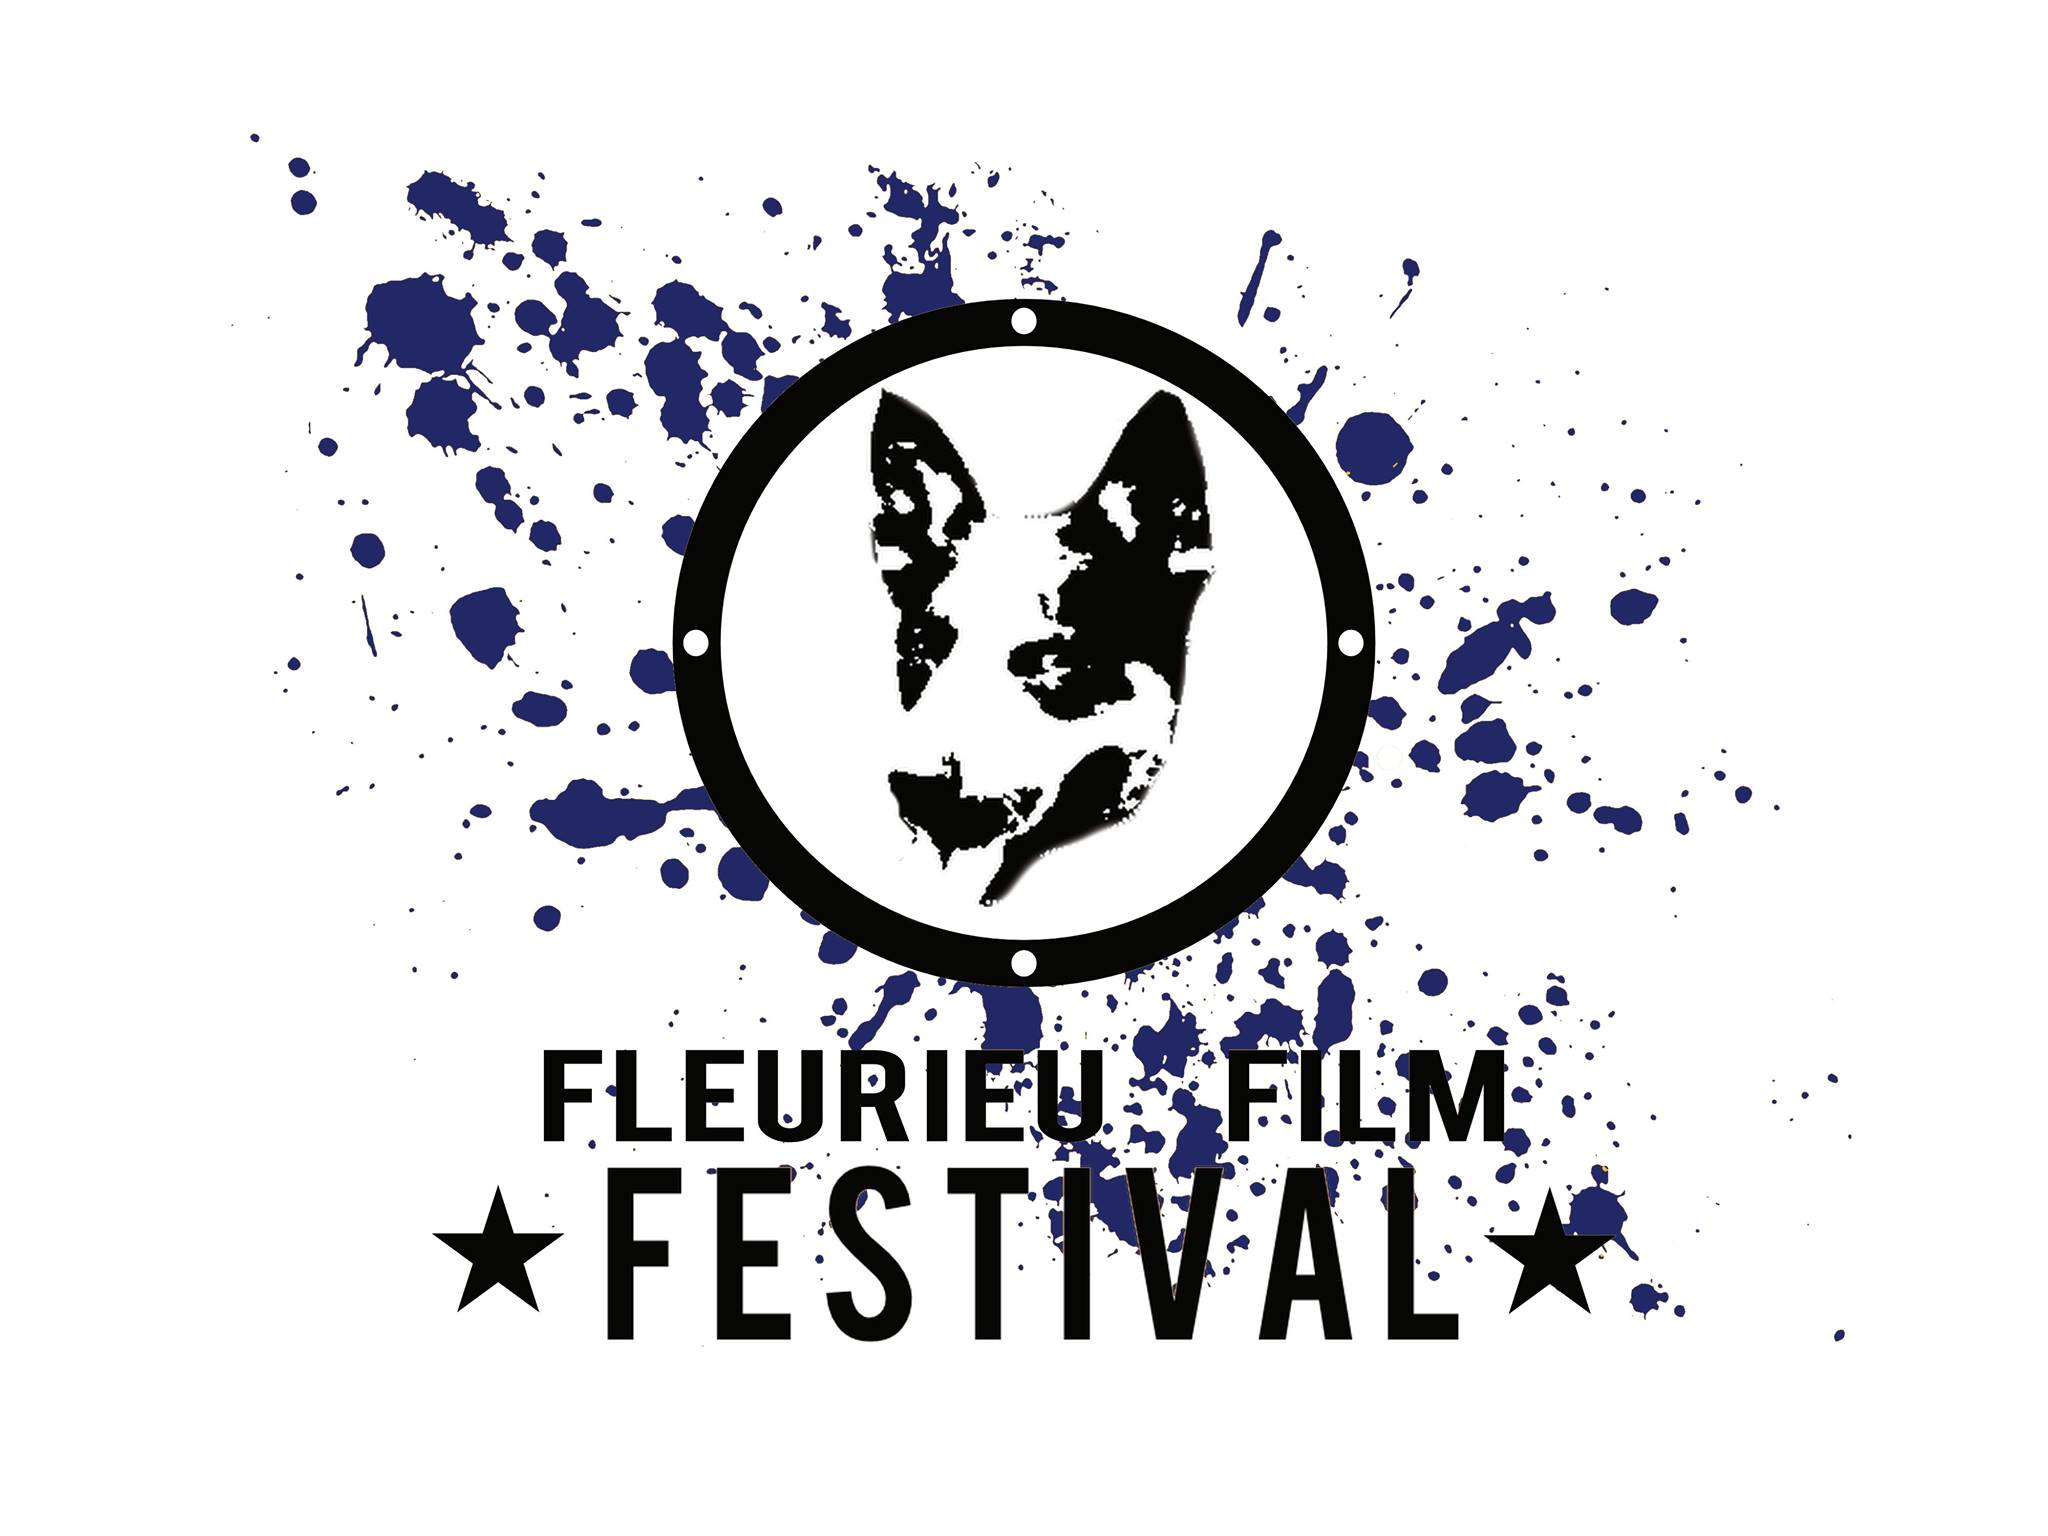 Fleurieu Film Festival - Pubs Sydney